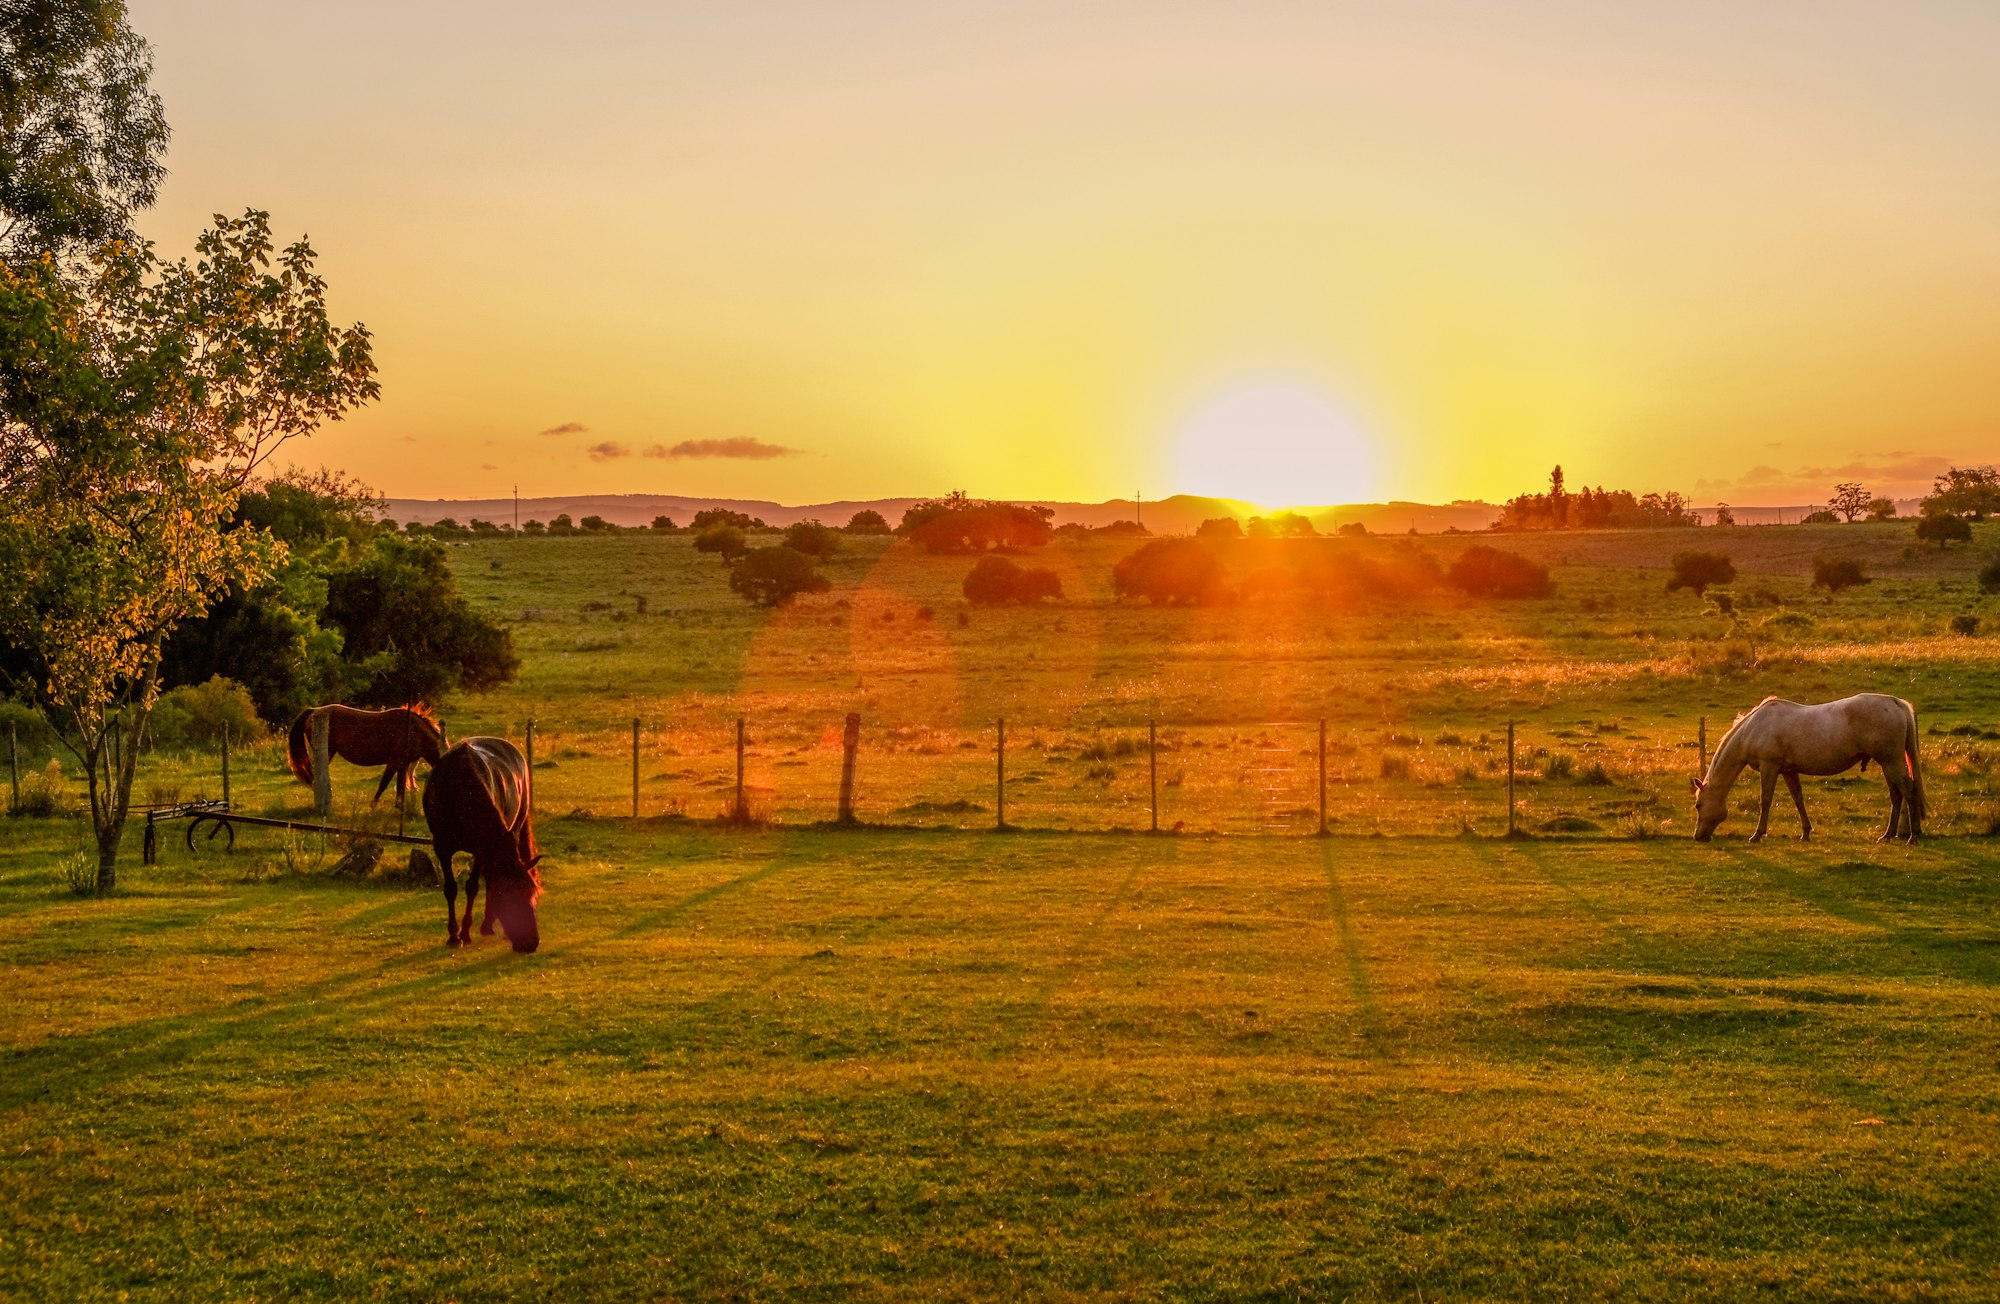 Horses on a farm at sunset.